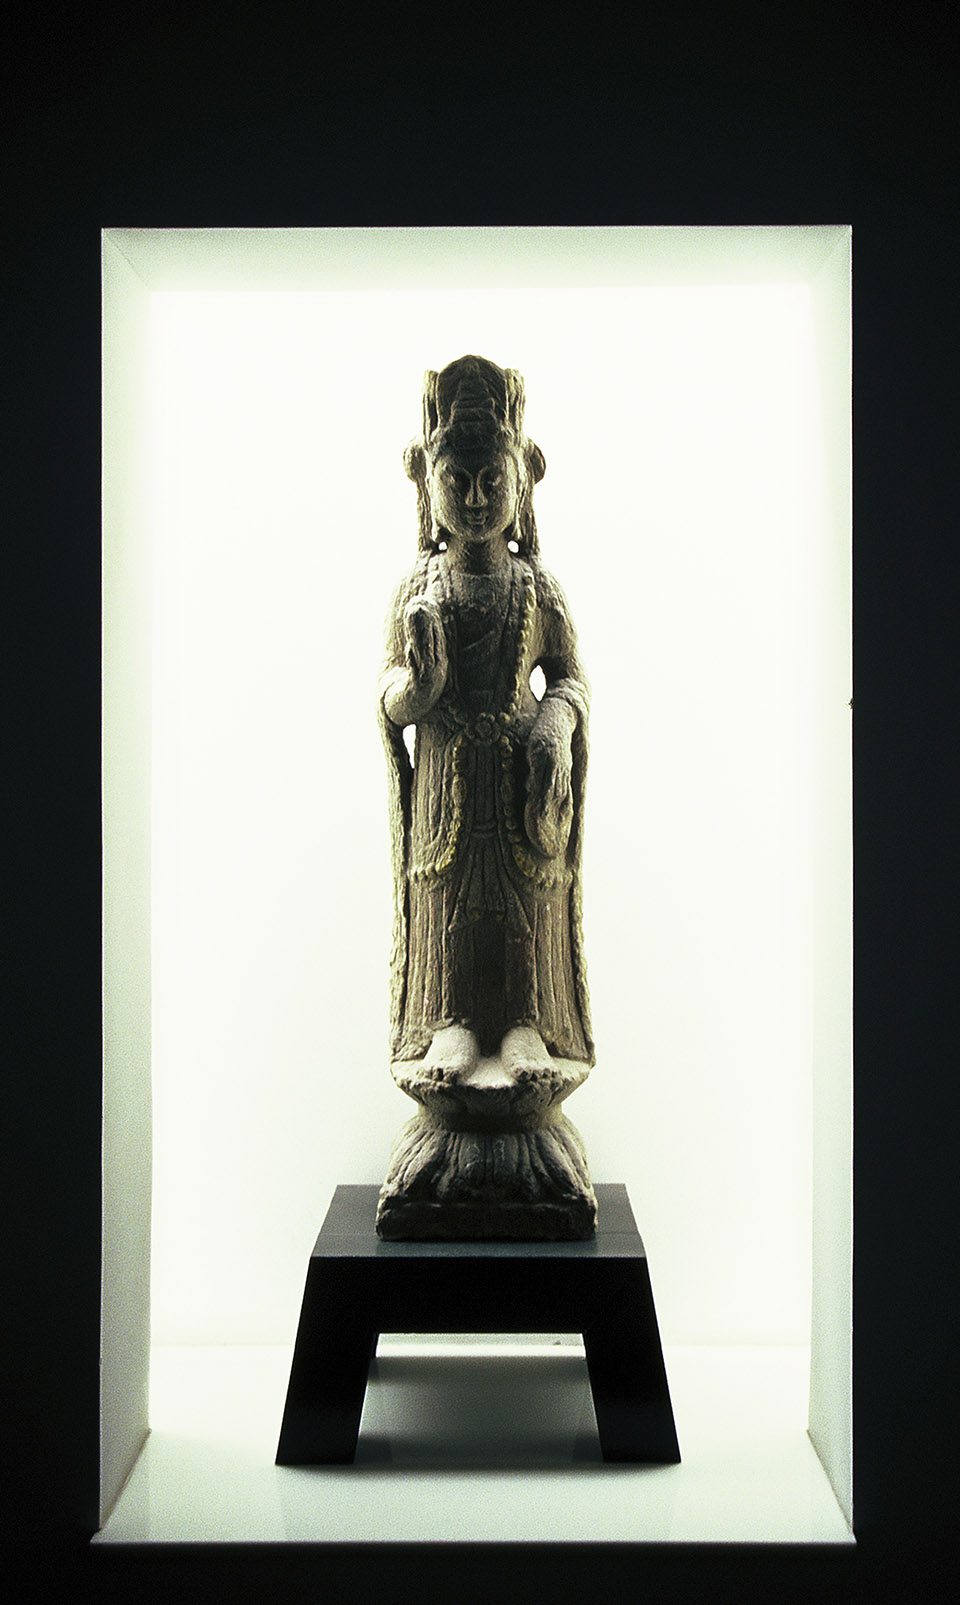 008-luyeyuan-stone-sculpture-art-museum-china-by-jiakun-architects.jpg